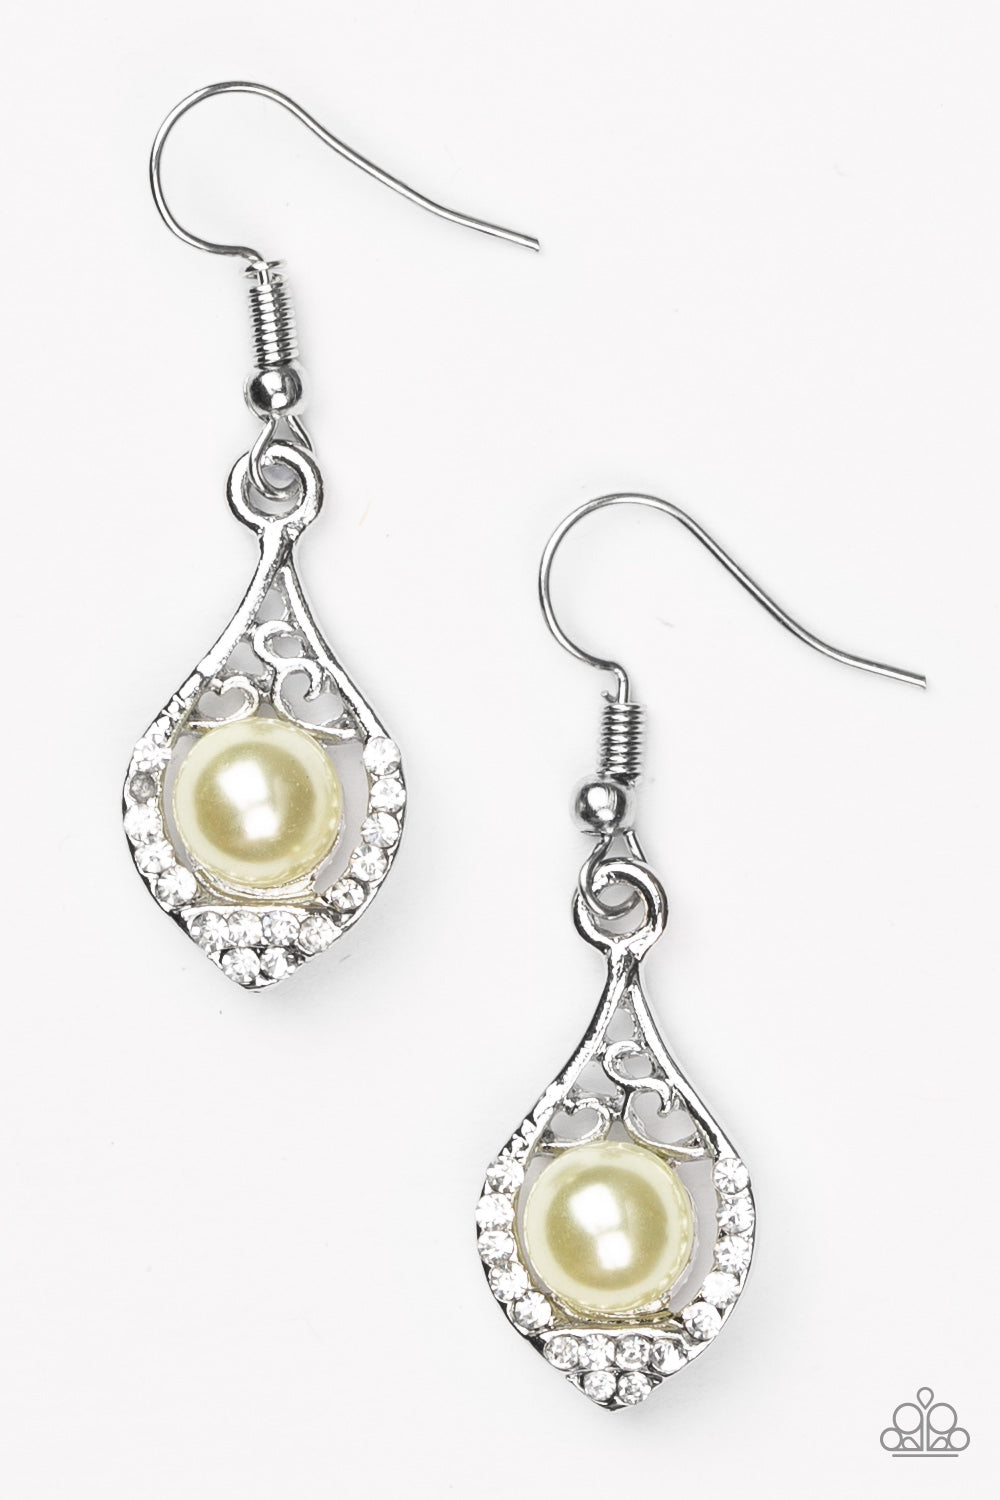 Paparazzi Westminster Waltz - Yellow Pearl - Rhinestone Earrings - $5 Jewelry With Ashley Swint